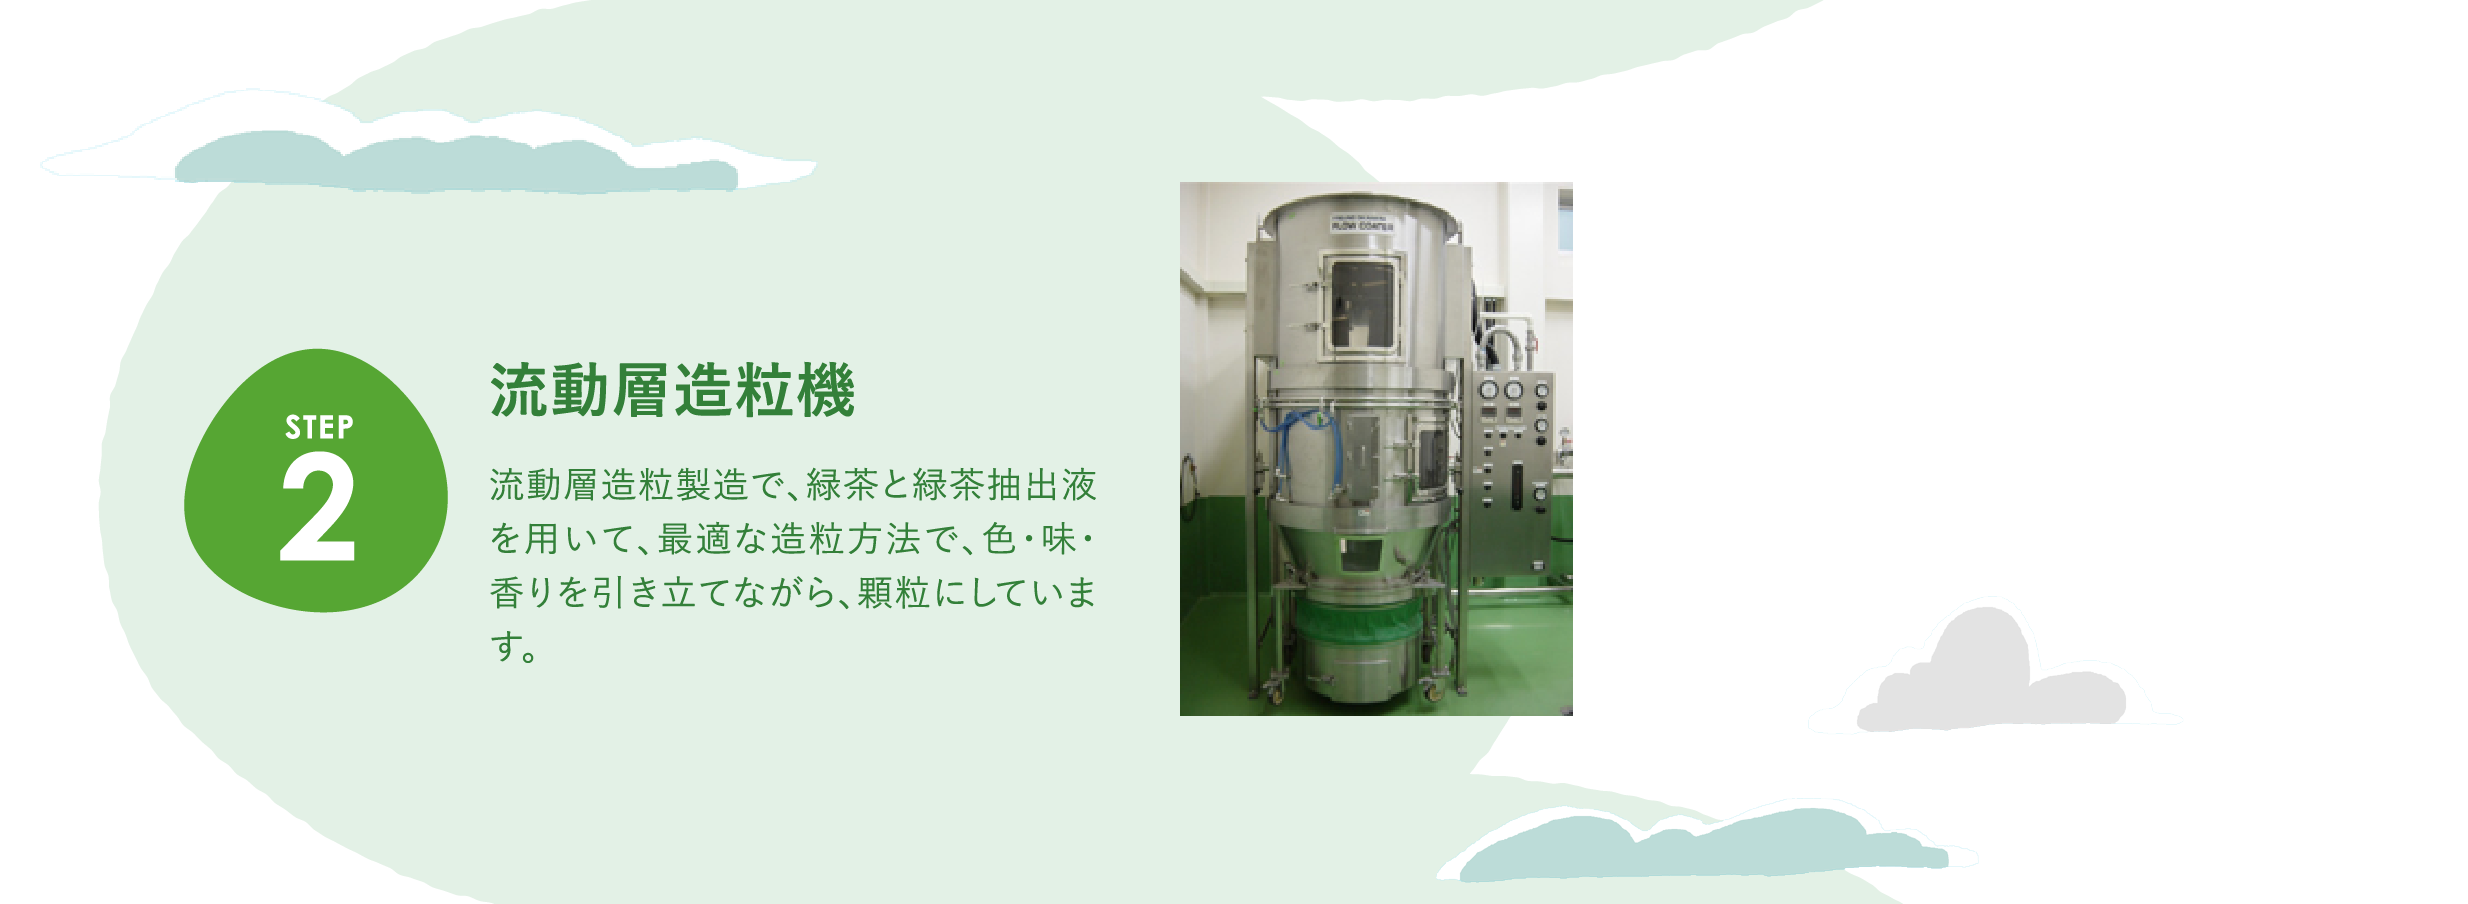 step2 流動層造粒機 流動層造粒製造で、緑茶と緑茶抽出液を用いて、最適な造粒方法で、色・味・香りを引き立てながら、顆粒にしています。